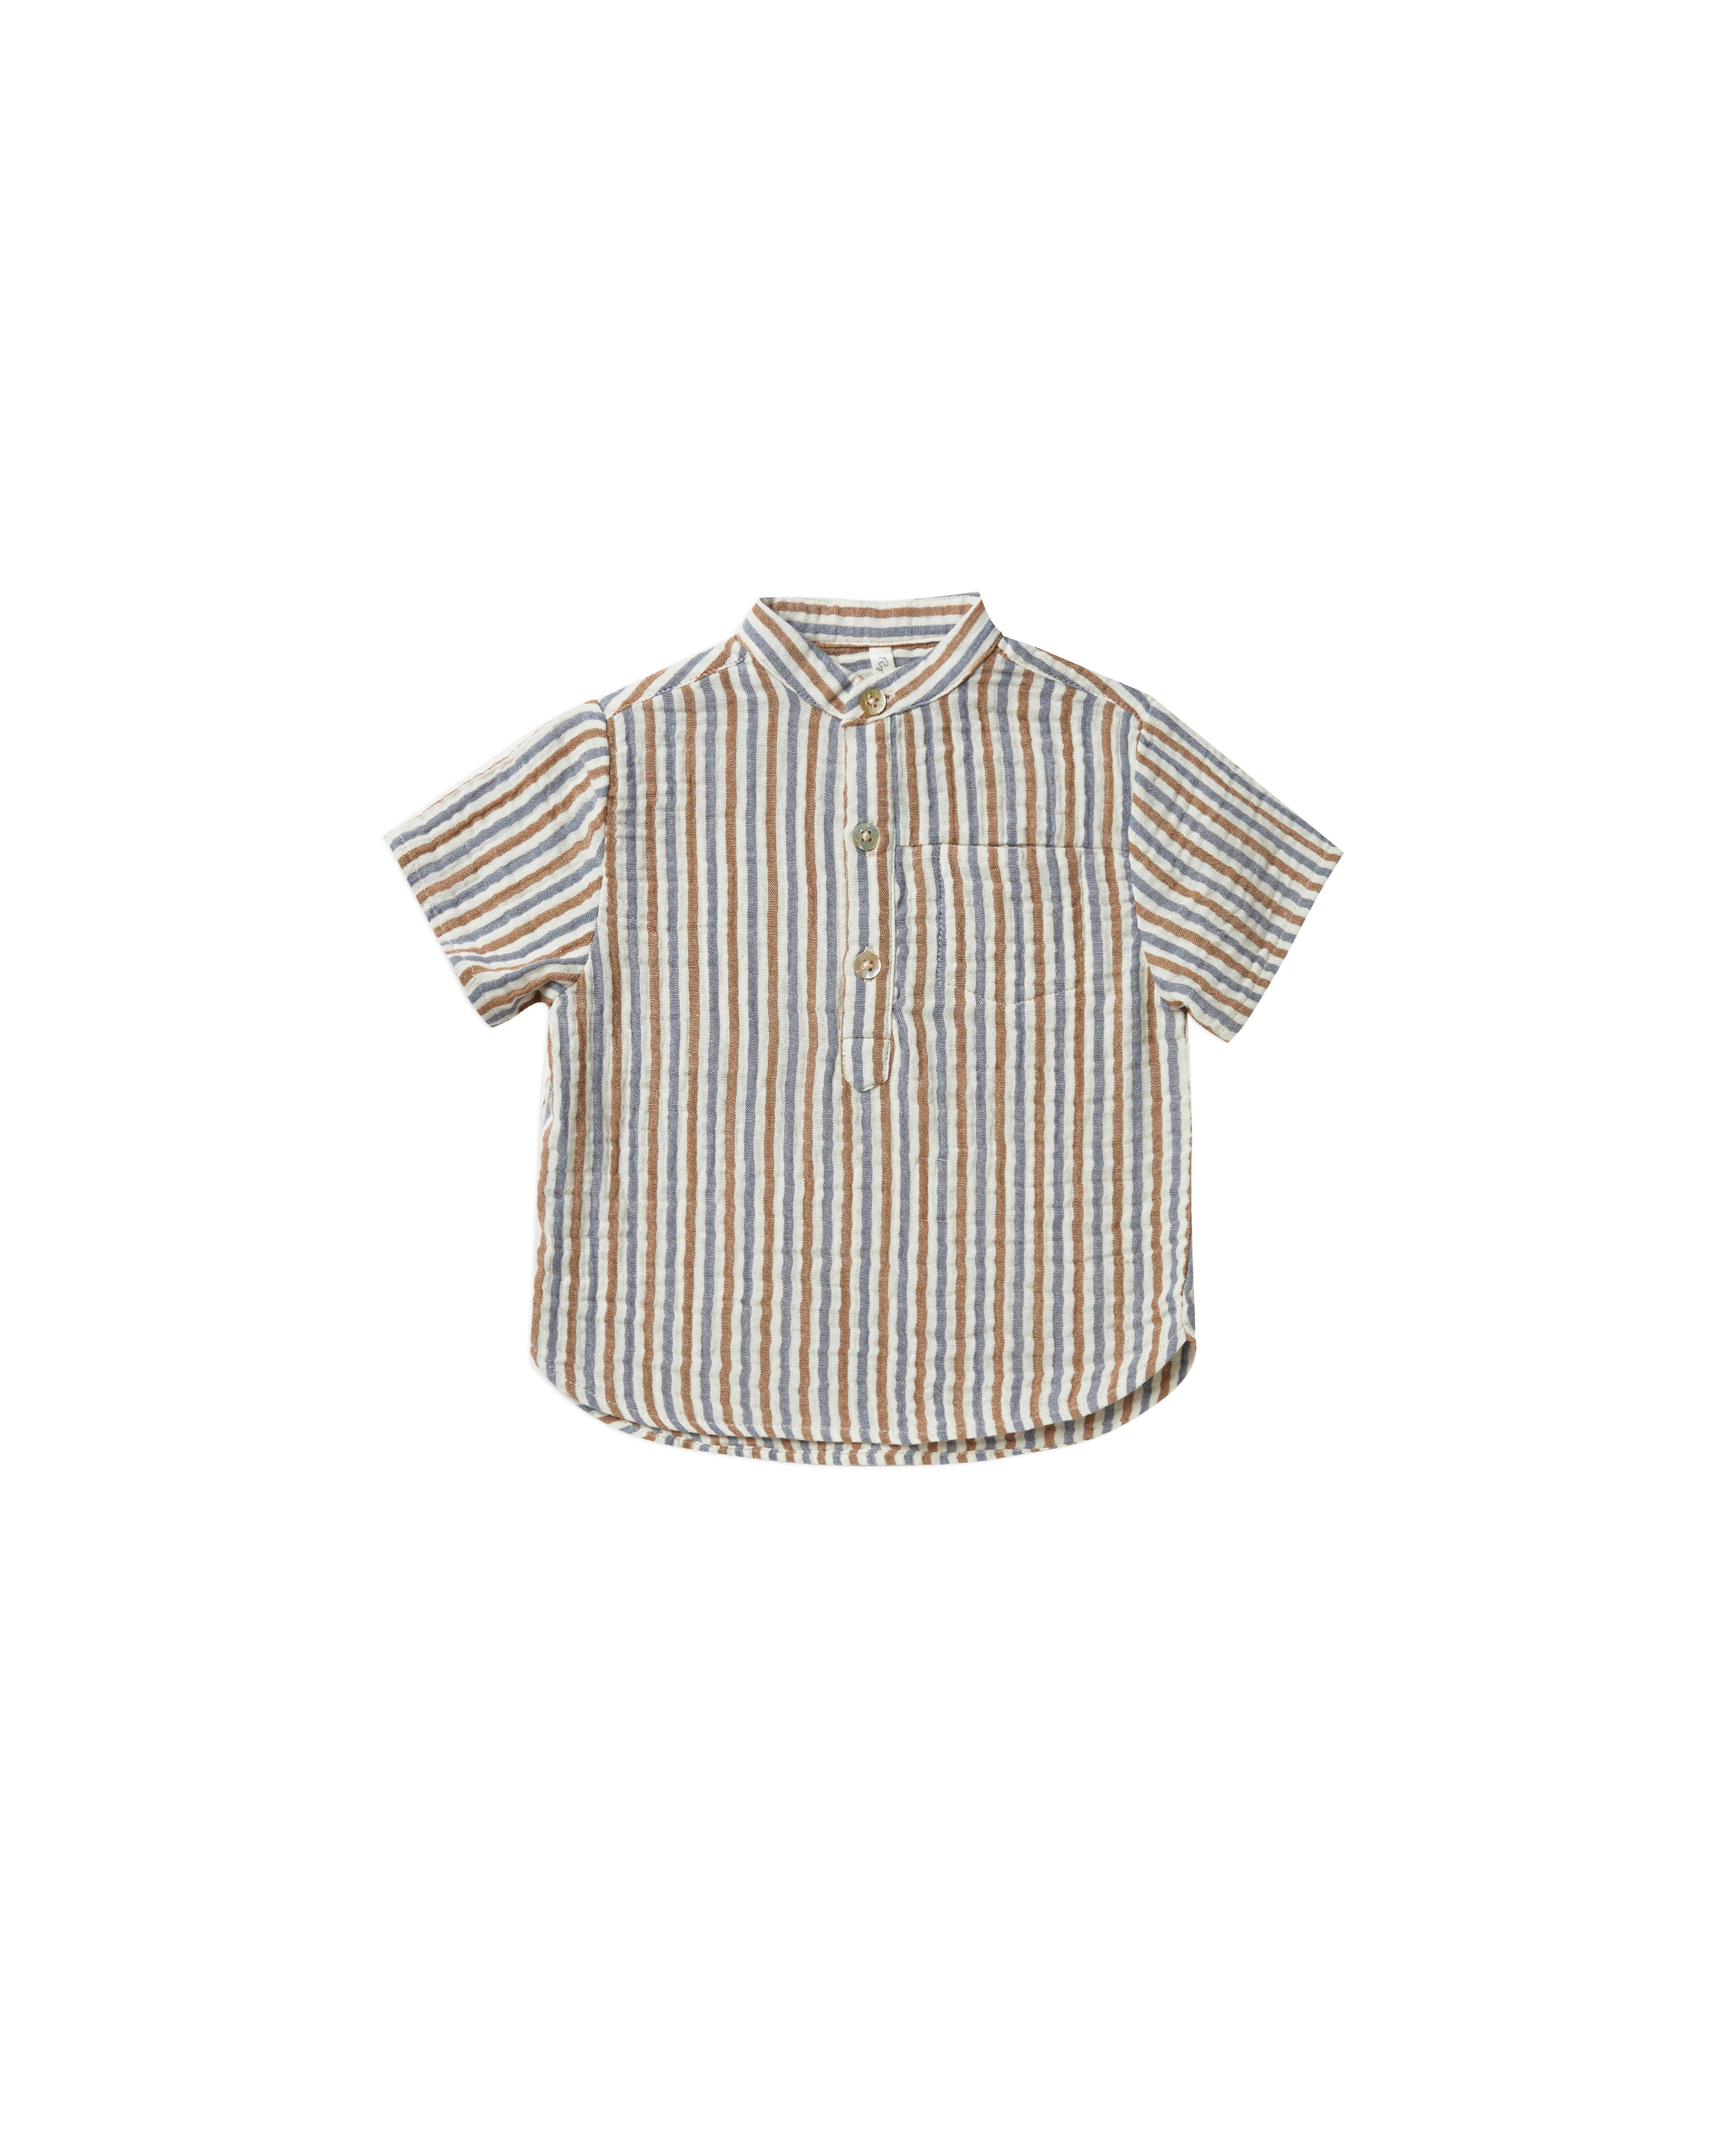 Rylee + Cru_Rylee + Cru Mason Shirt Nautical Stripe_